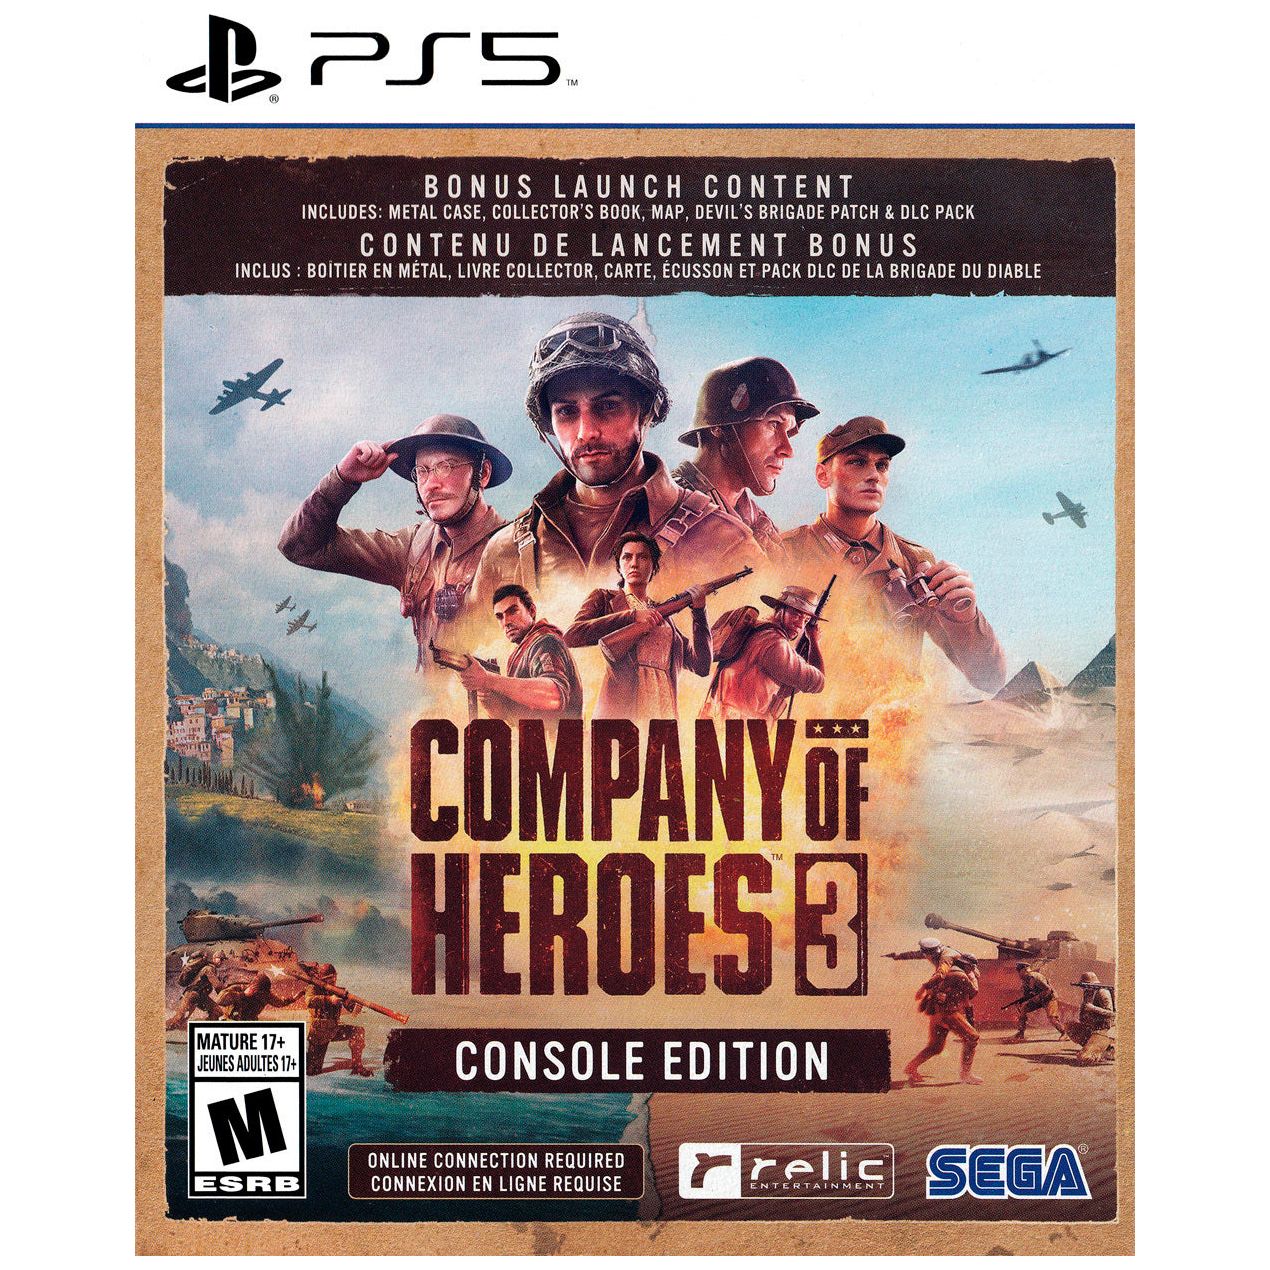 PS5 - Company of Heroes 3 plus Bonus Launch Content (Sealed)